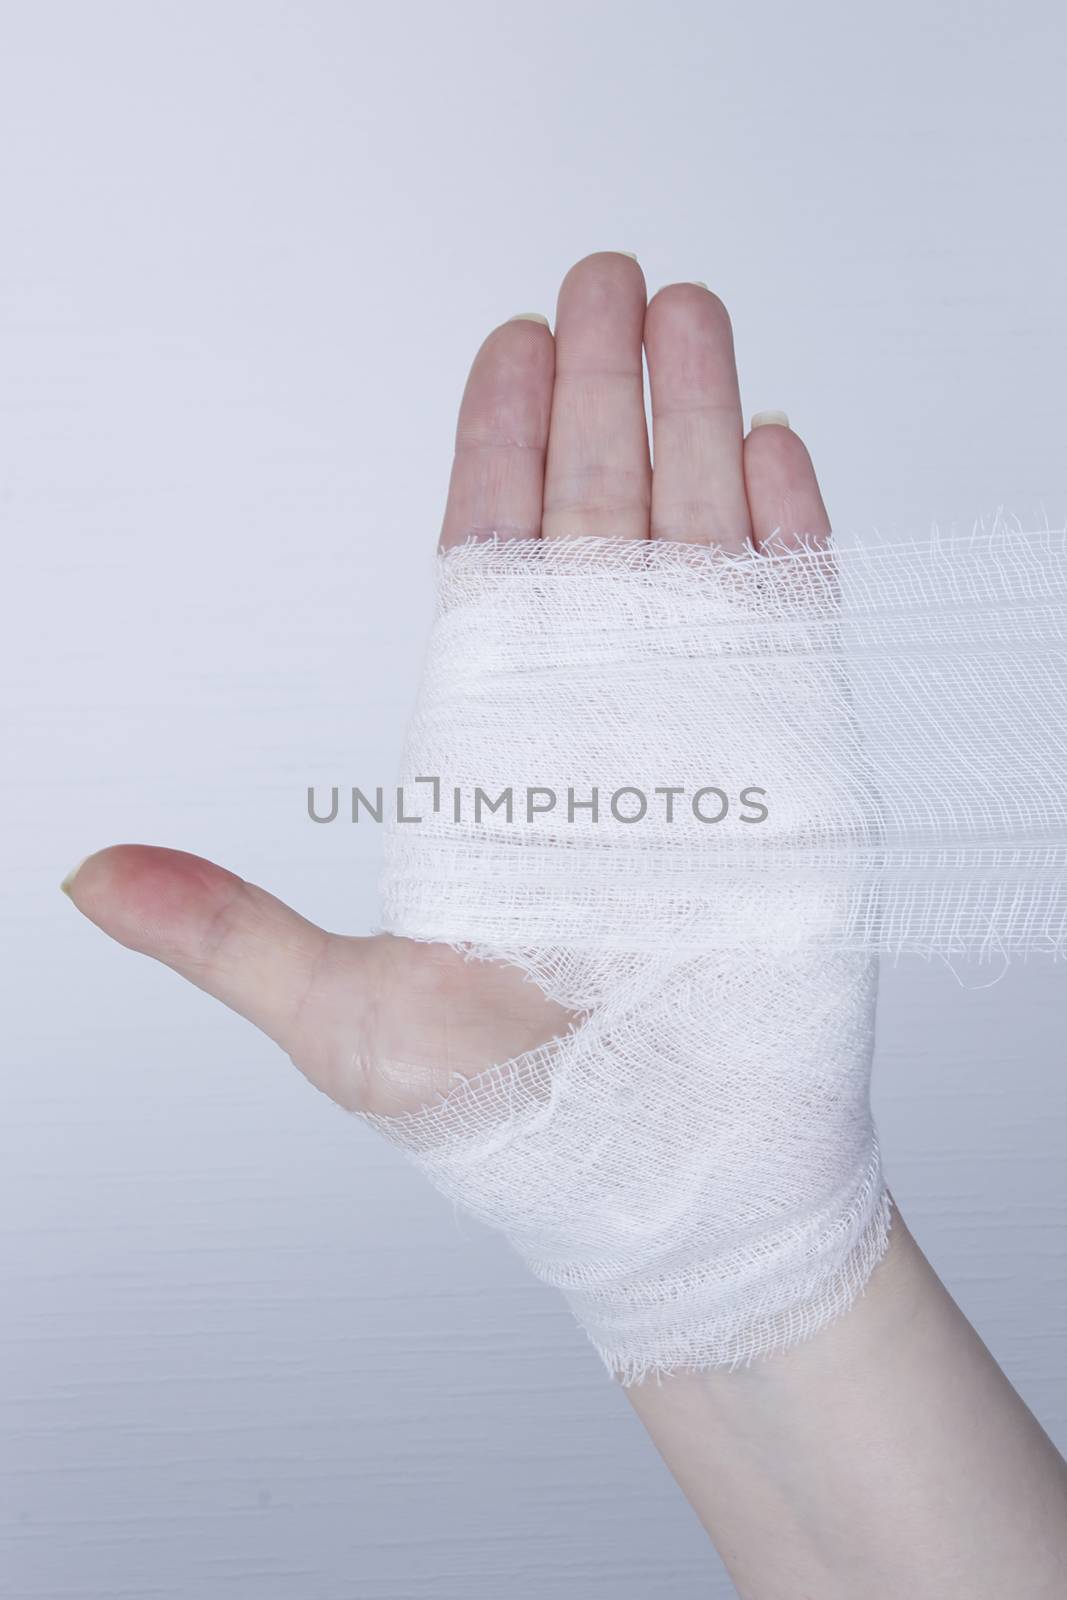 bandage on a hand by VIPDesignUSA